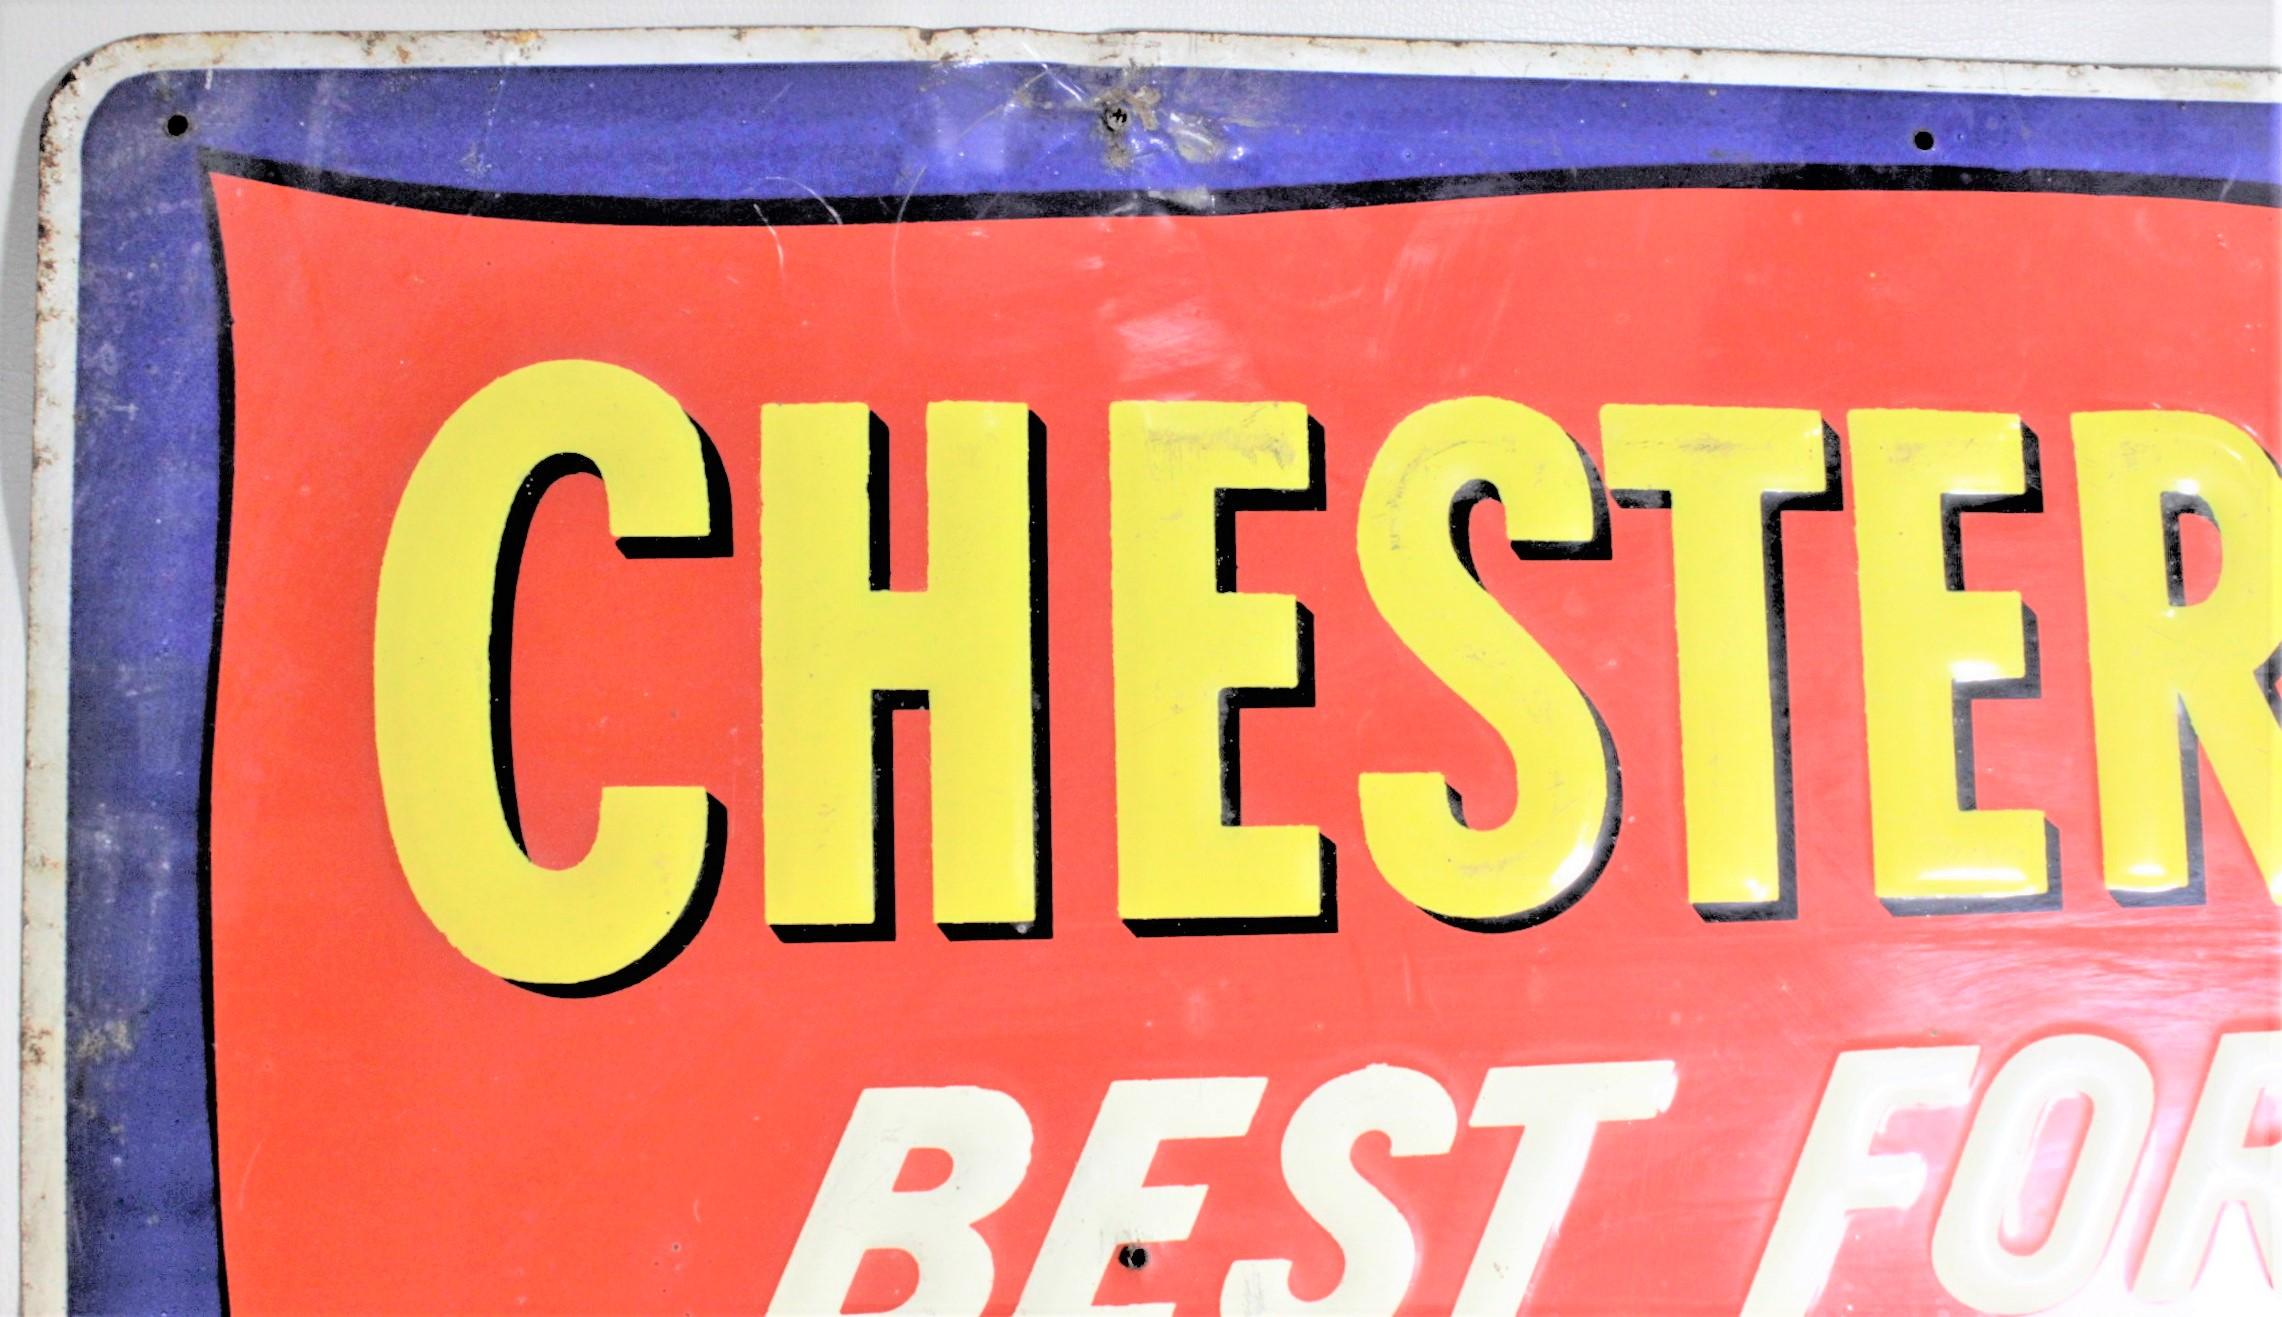 chesterfield cigarette sign